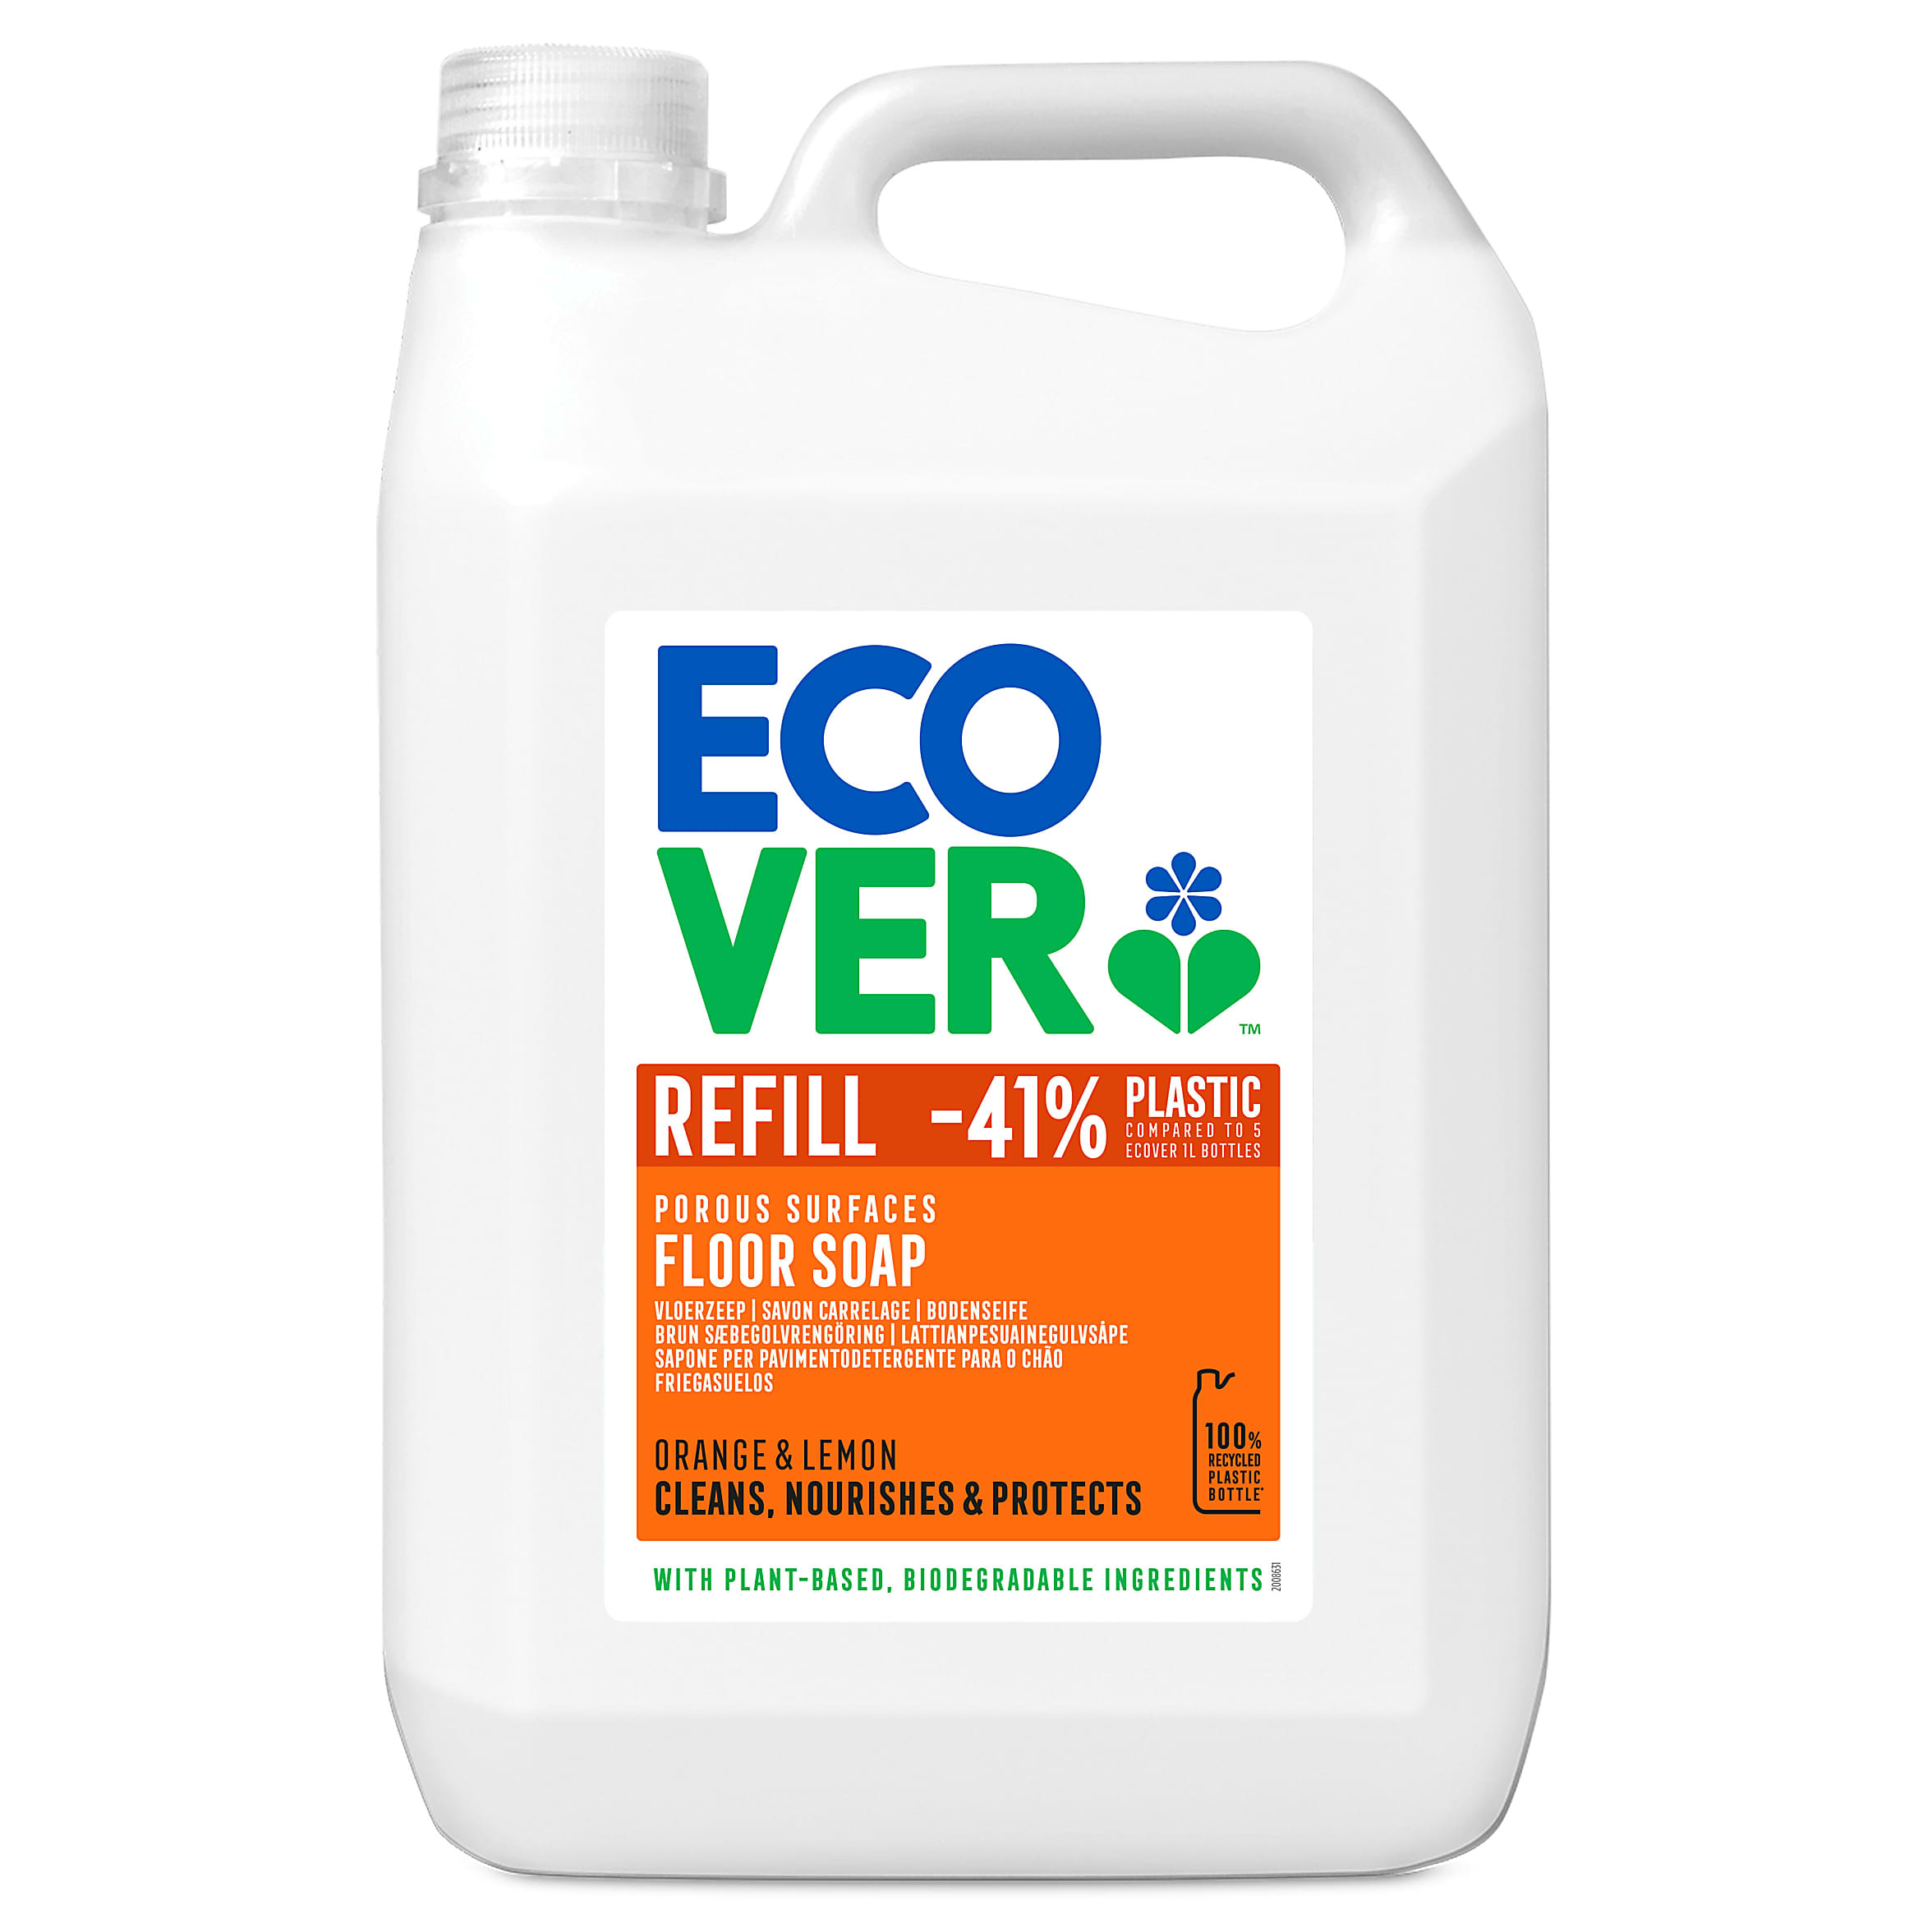 Voeding Versnipperd Huiskamer Vloerzeep 5 Liter | Ecoverdirect shop NL